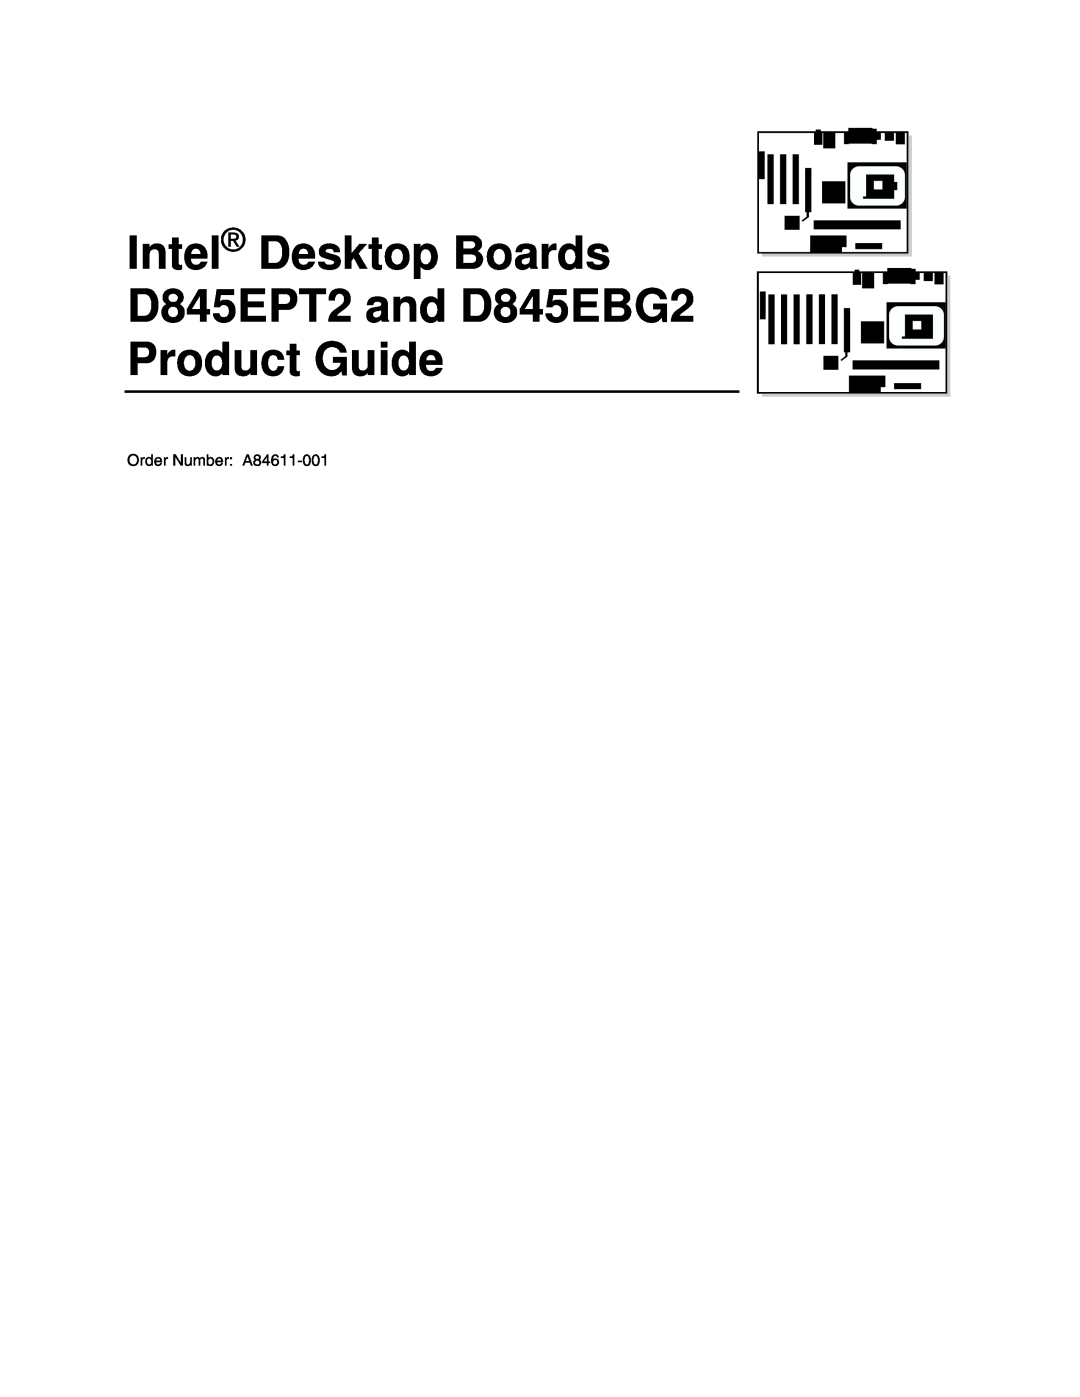 Intel manual Intel Desktop Boards D845EPT2 and D845EBG2, for the Intel Pentium 4 Processor, Product Brief 